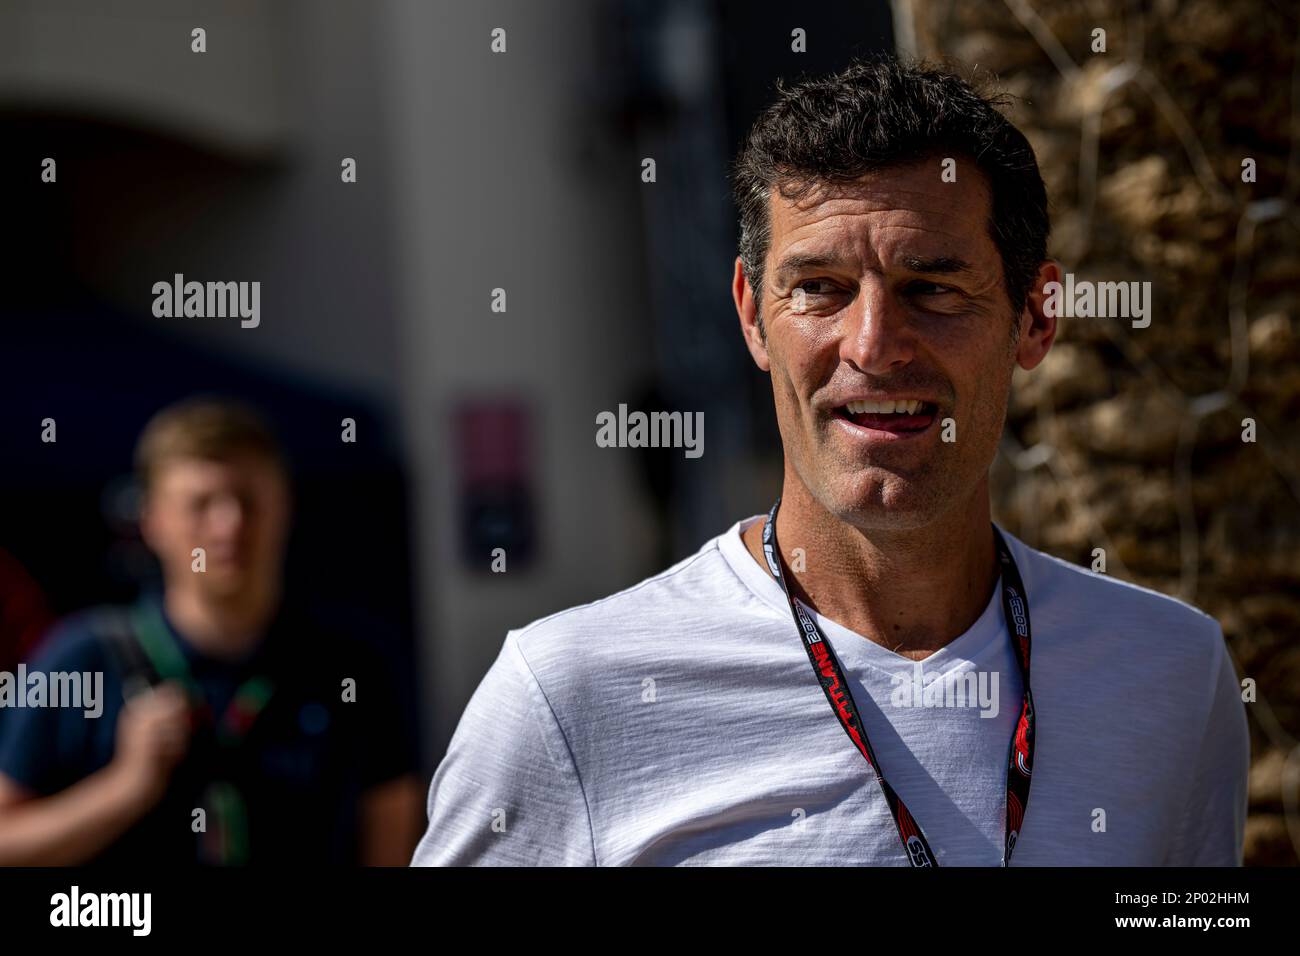 Sakhir, Bahrain, 01. März 2023, Mark Webber nimmt am Testtag nach der Saison Teil, dem Wintertest der Formel-1-Meisterschaft 2023. Kredit: Michael Potts/Alamy Live News Stockfoto